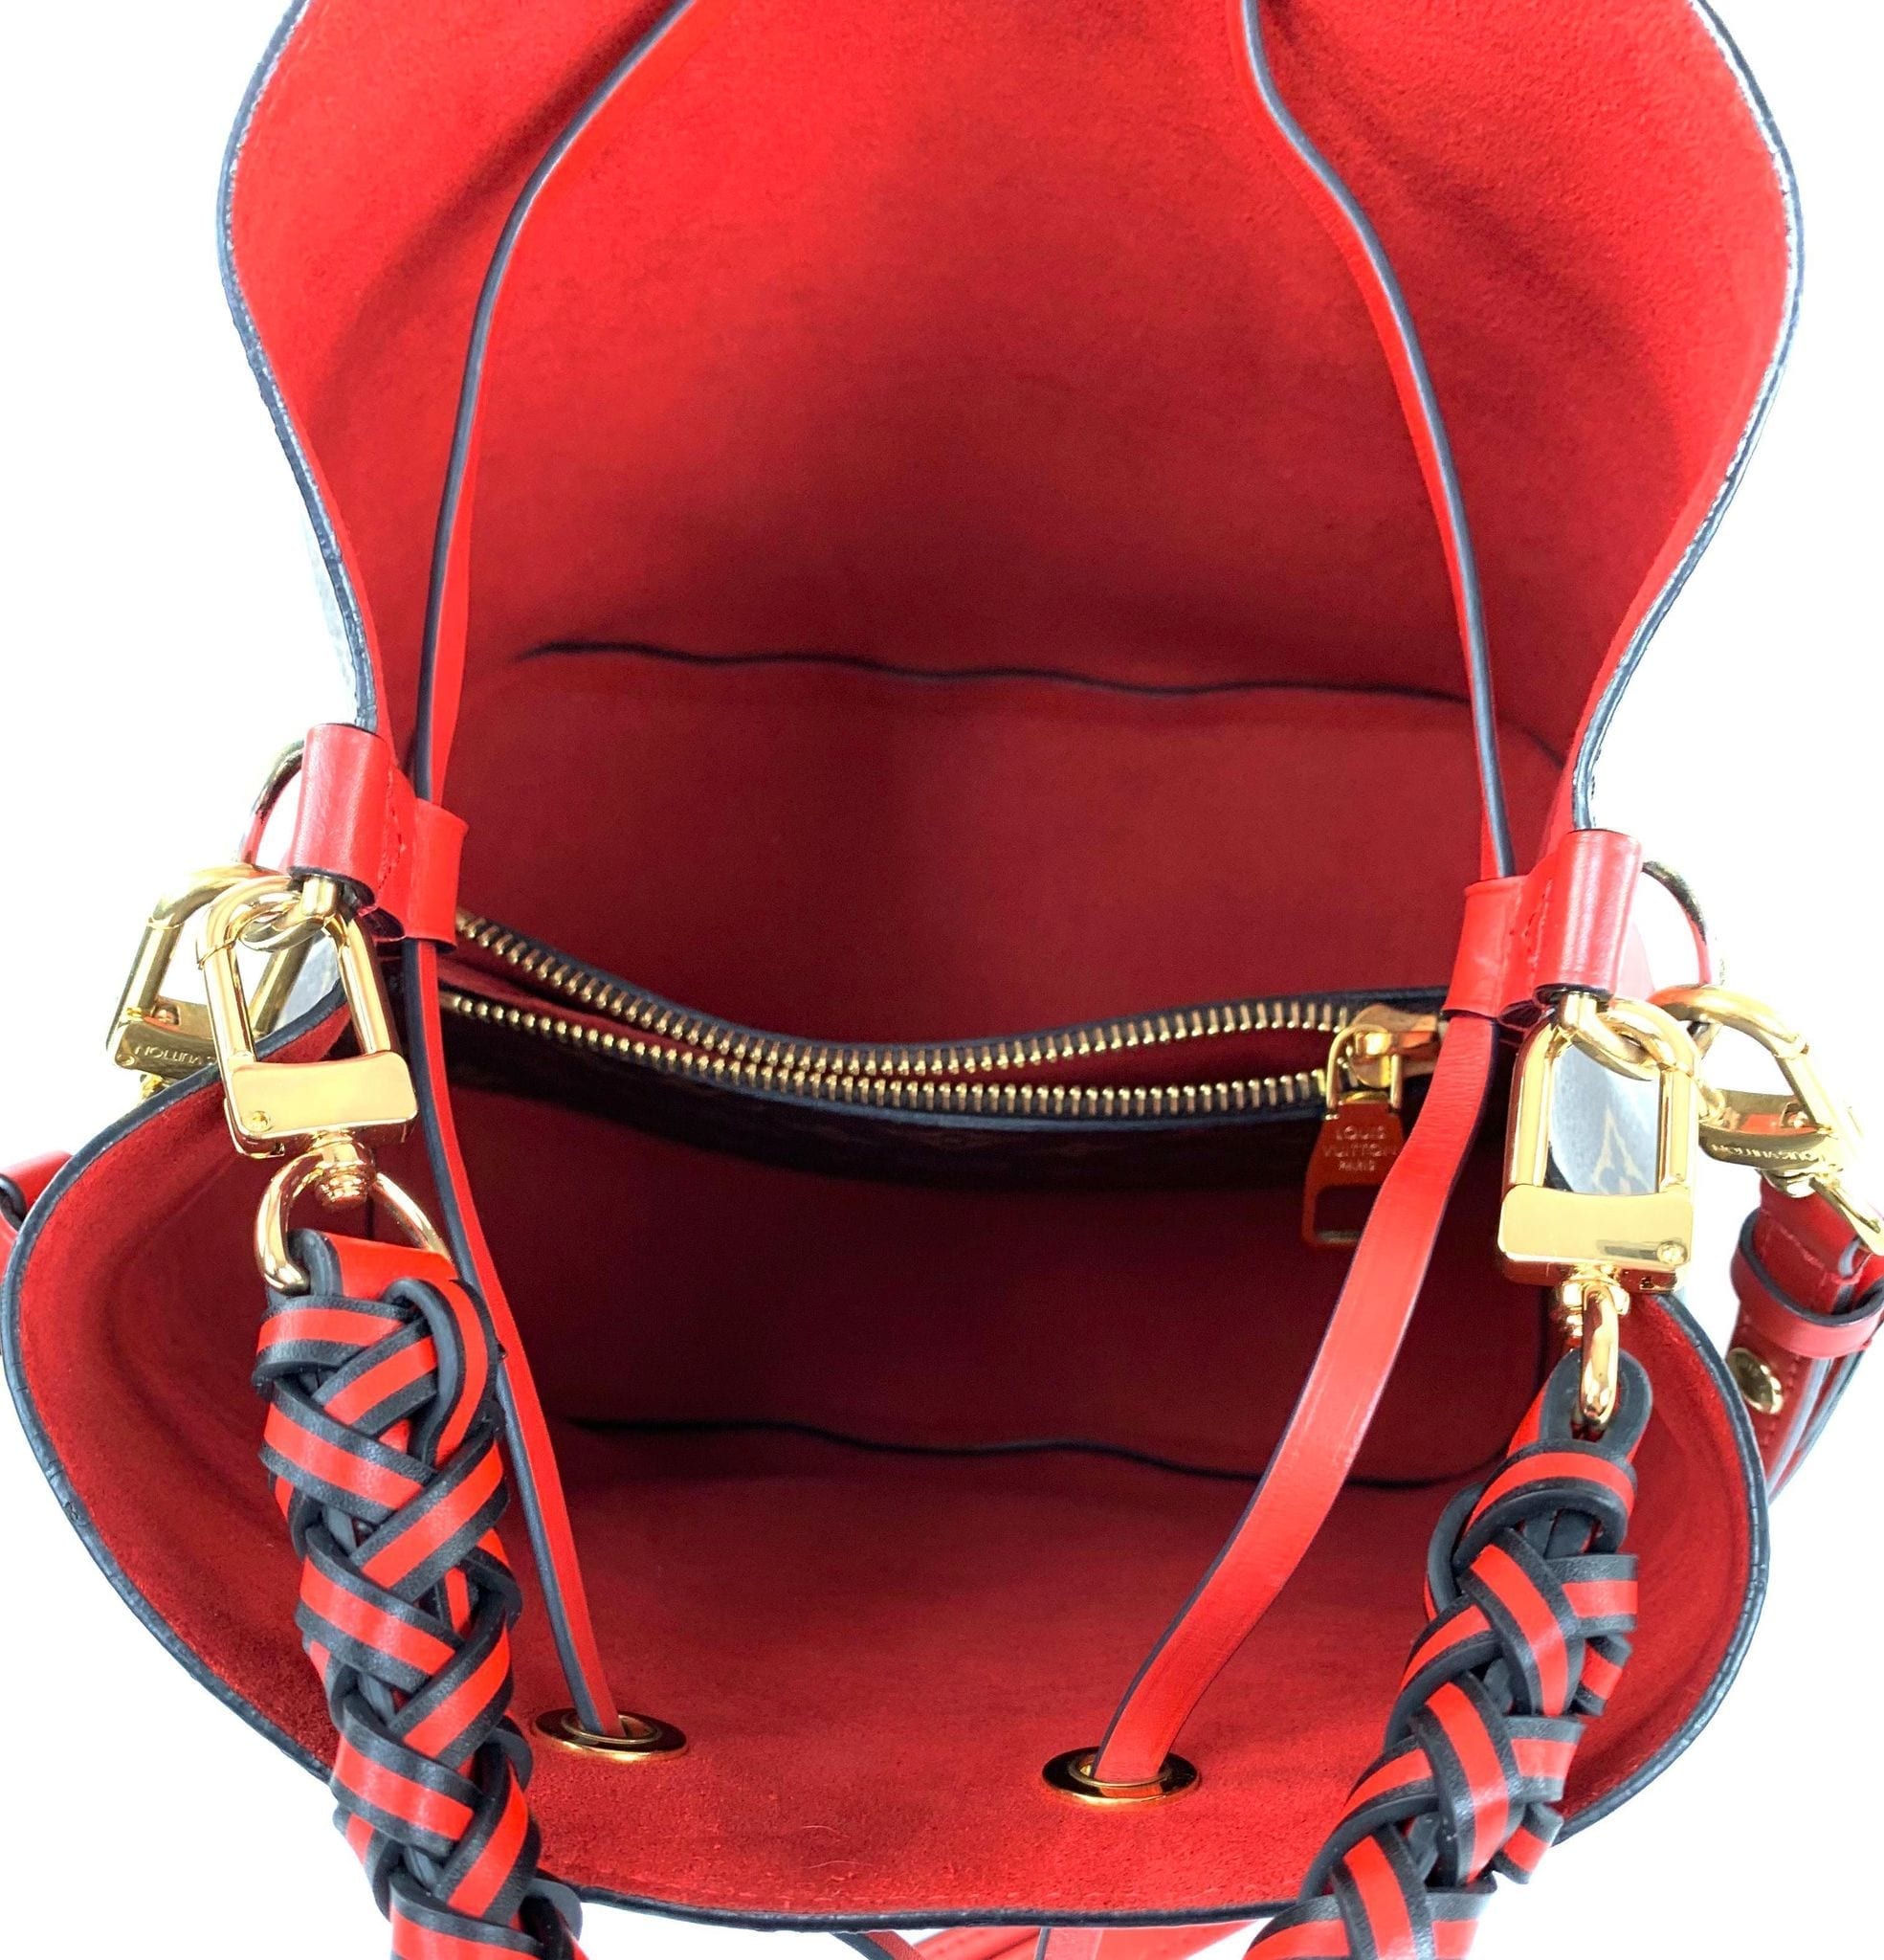 Genuine Leather Plain Strap Replacement for NeoNoe Hnalde Strap Bucket Bag Handbag Top Handle Black Brown Leather Strap